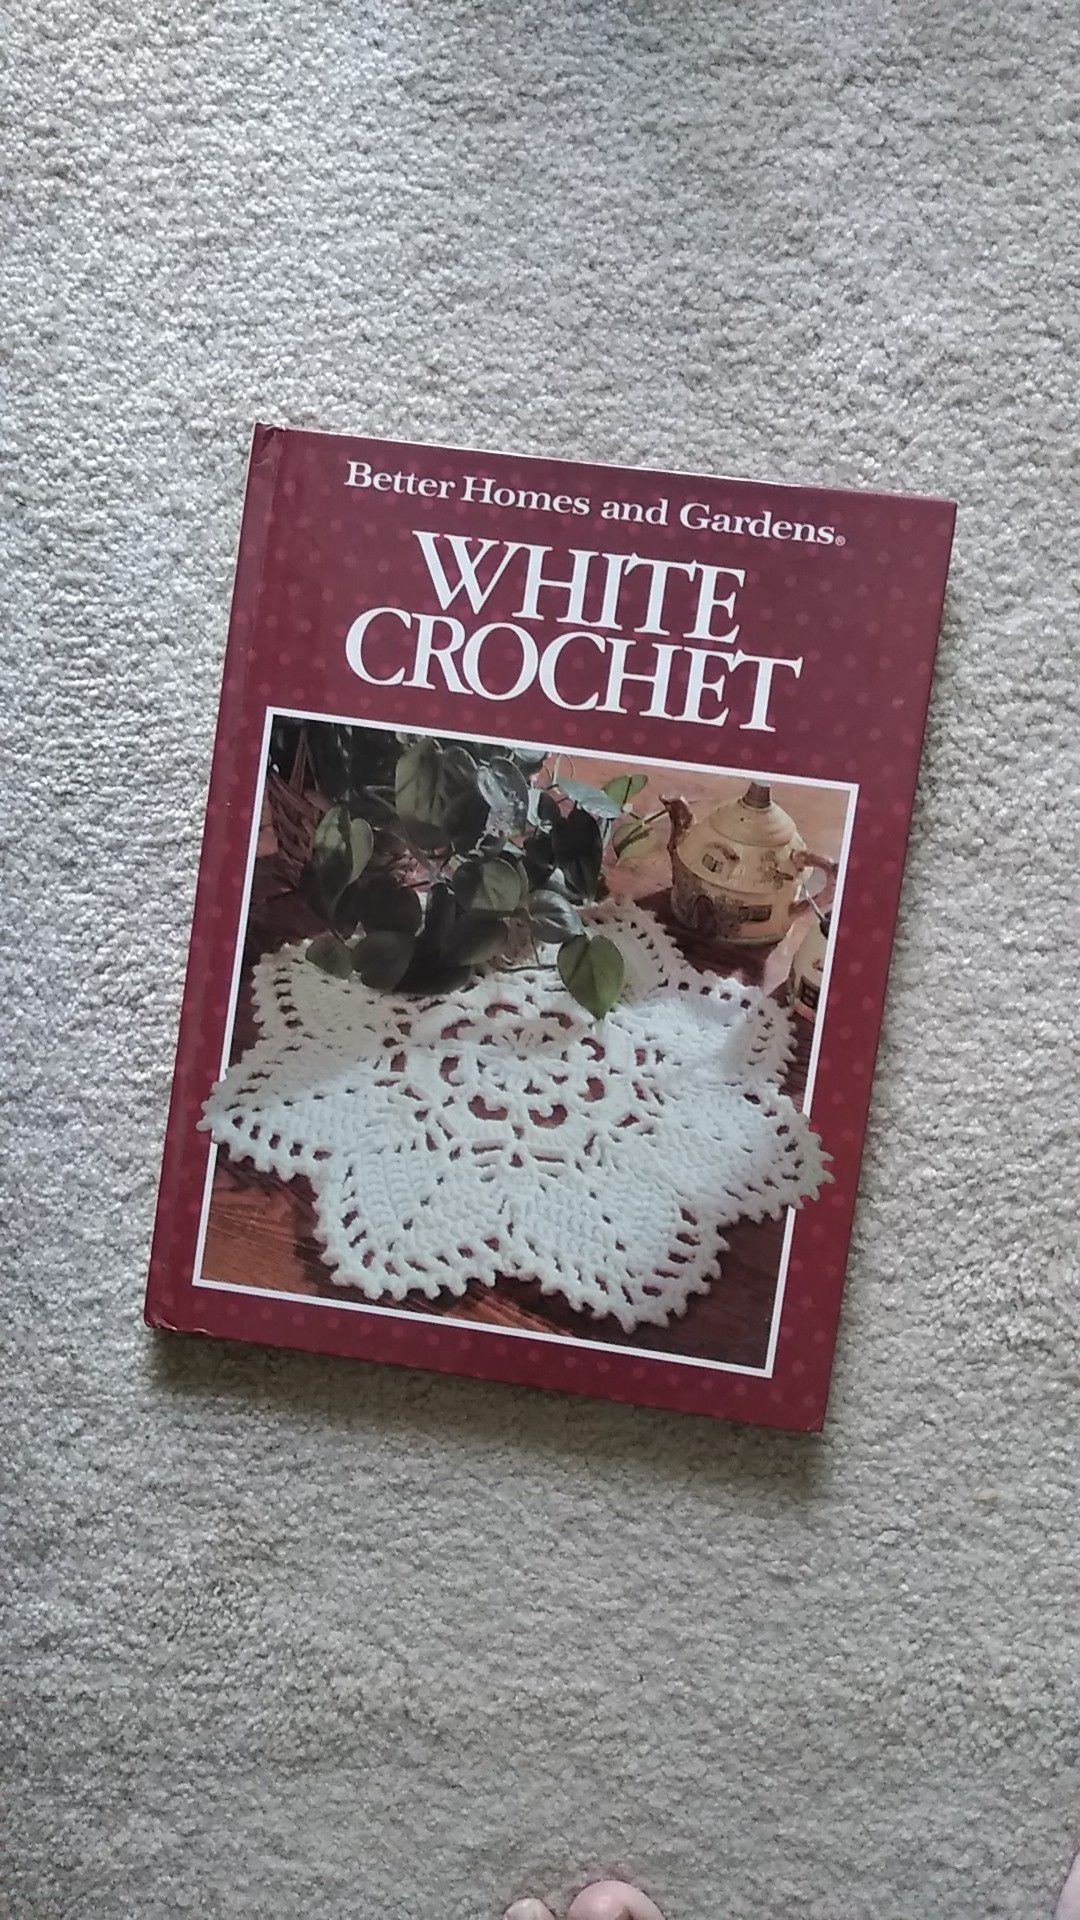 Crochet designs(better homes & gardens)